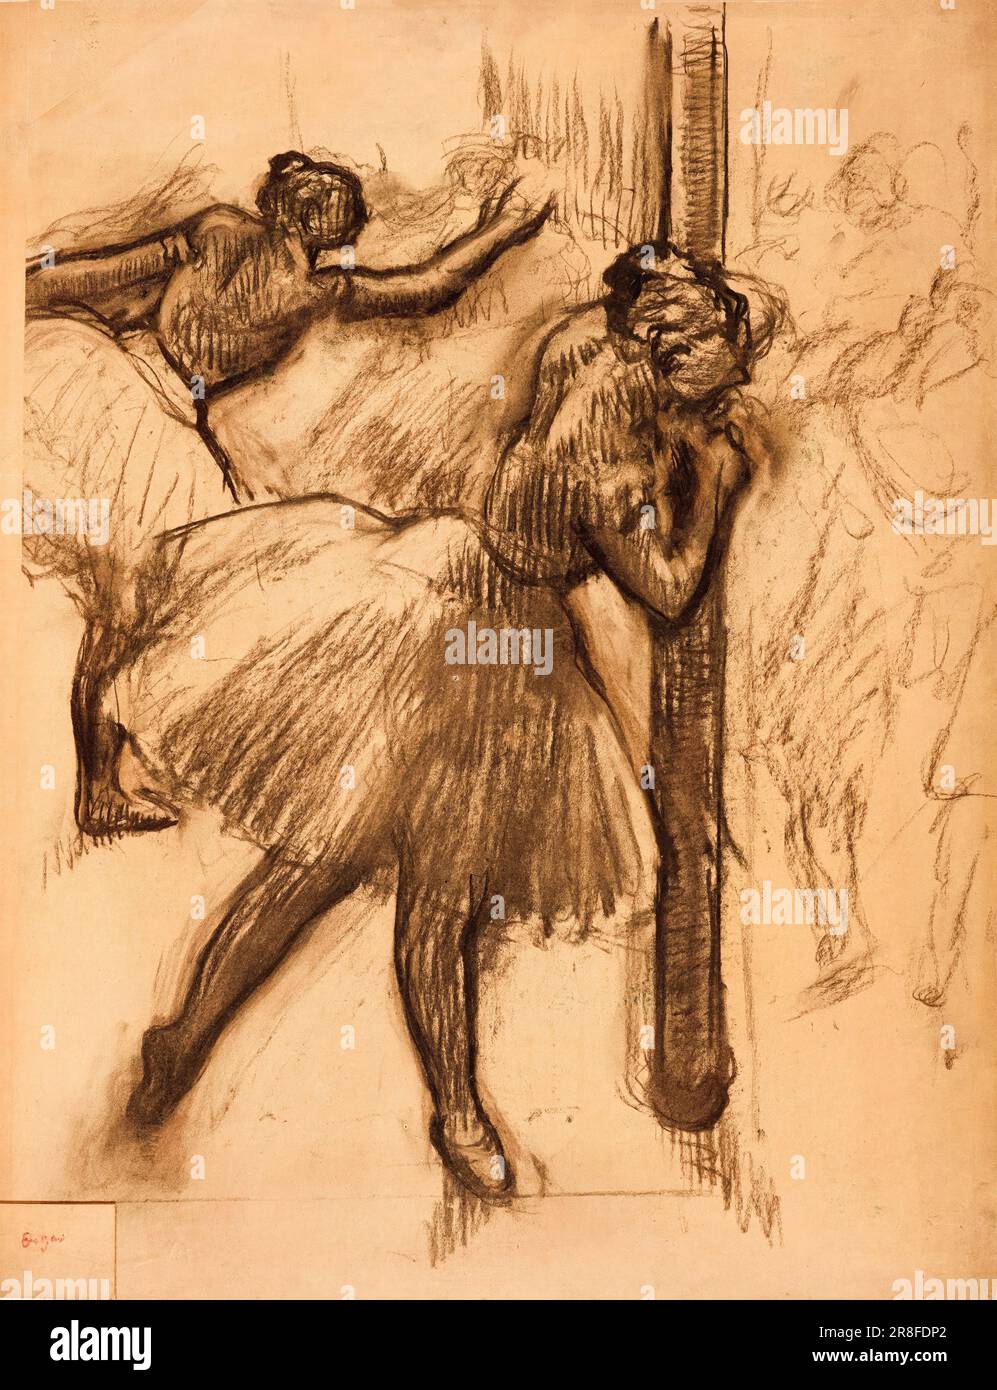 Edgar Degas | Bailly Gallery